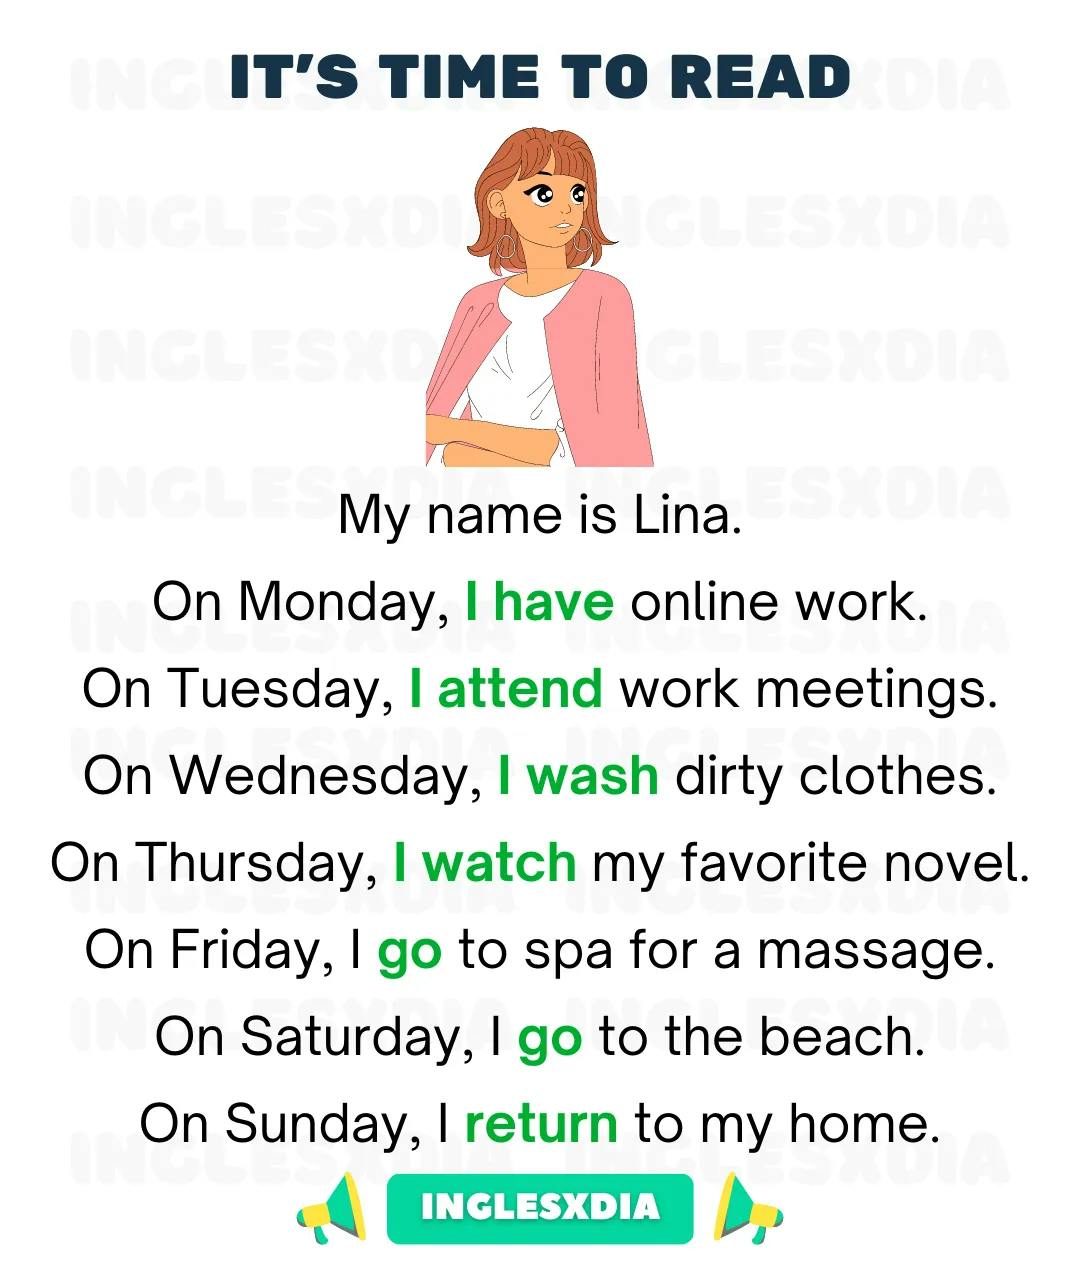 Lina's routine